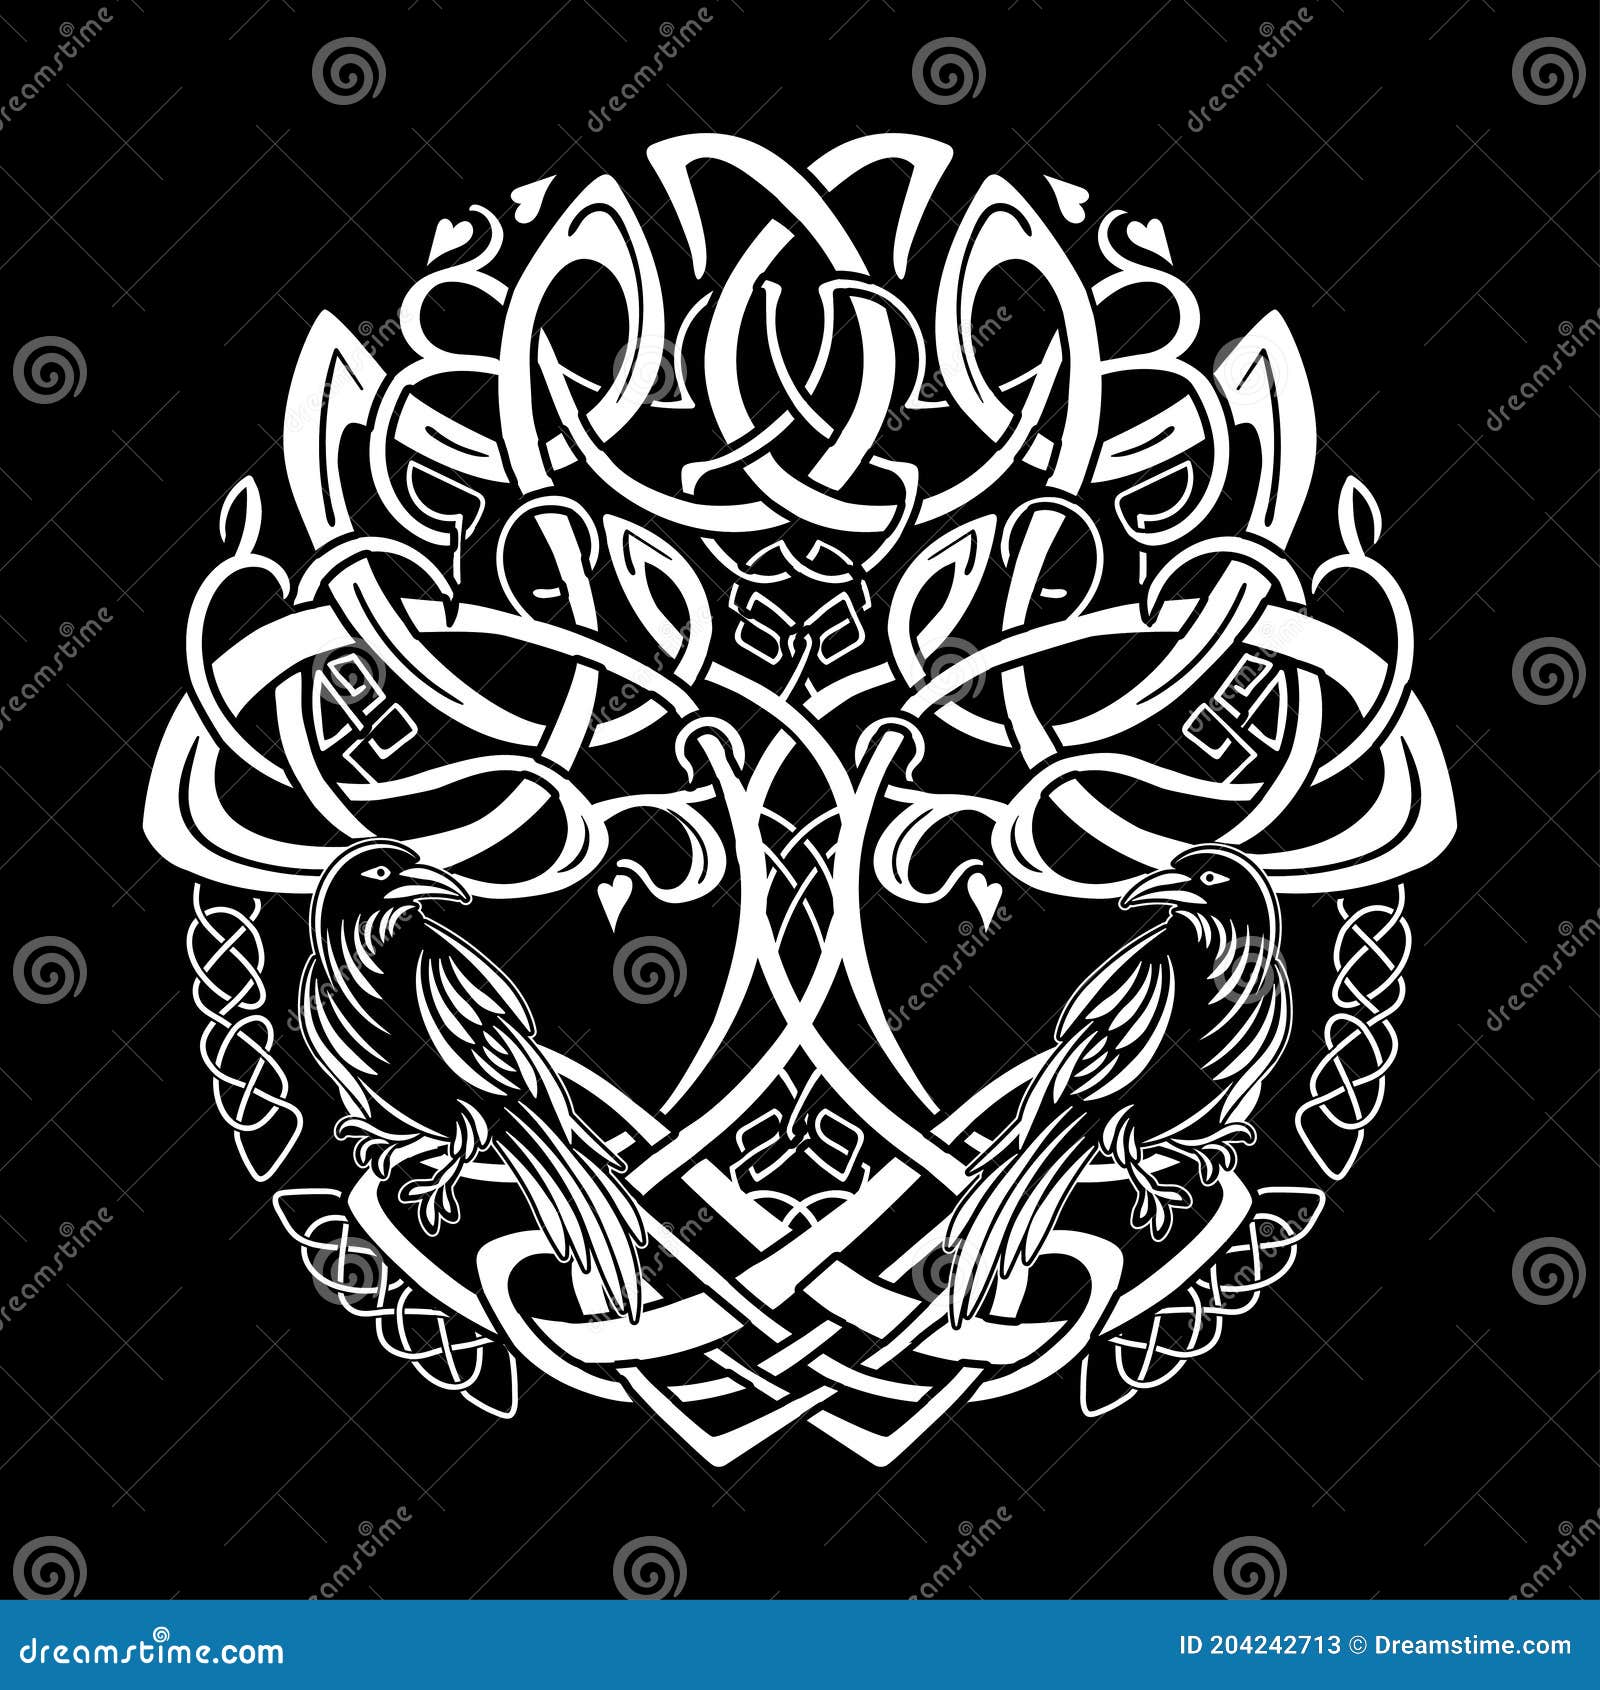 Stainless Steel Yggdrasil Huginn & Muninn Odins Ravens Hexagon Crest Flat Top Biker Style Polished Ring 